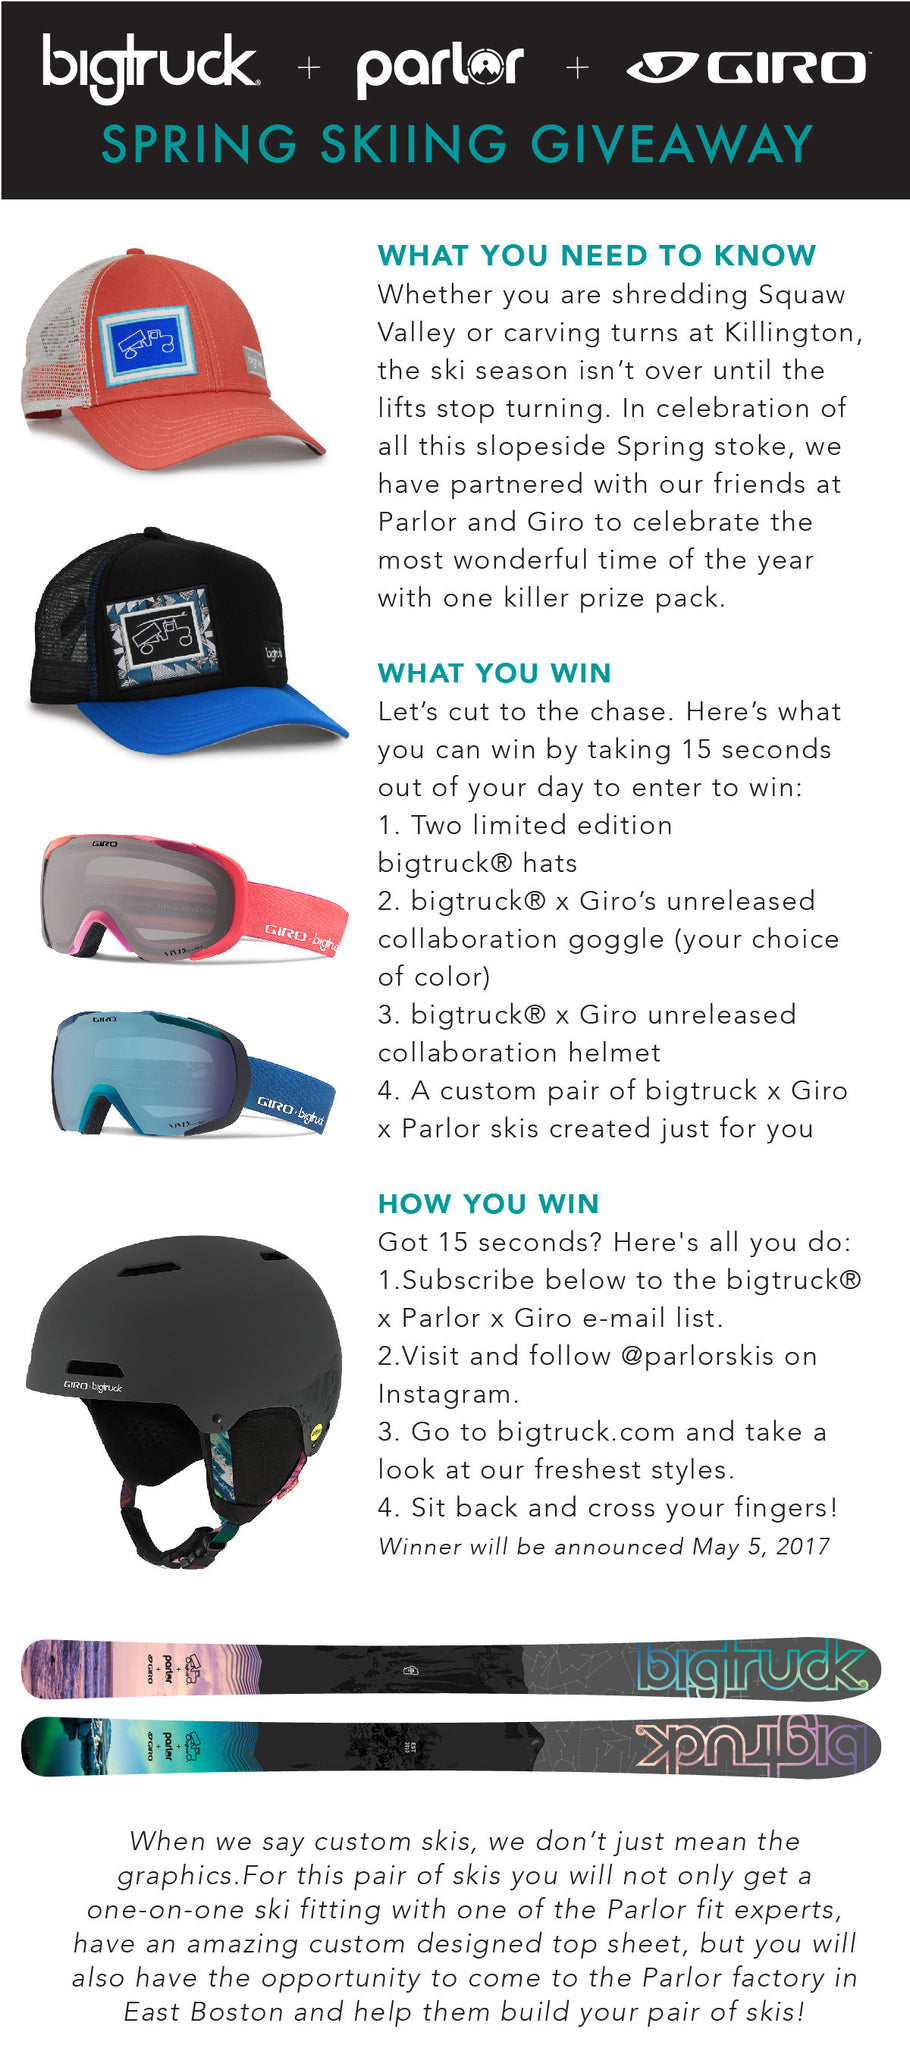 bigtruck Parlor Giro spring skiing giveaway